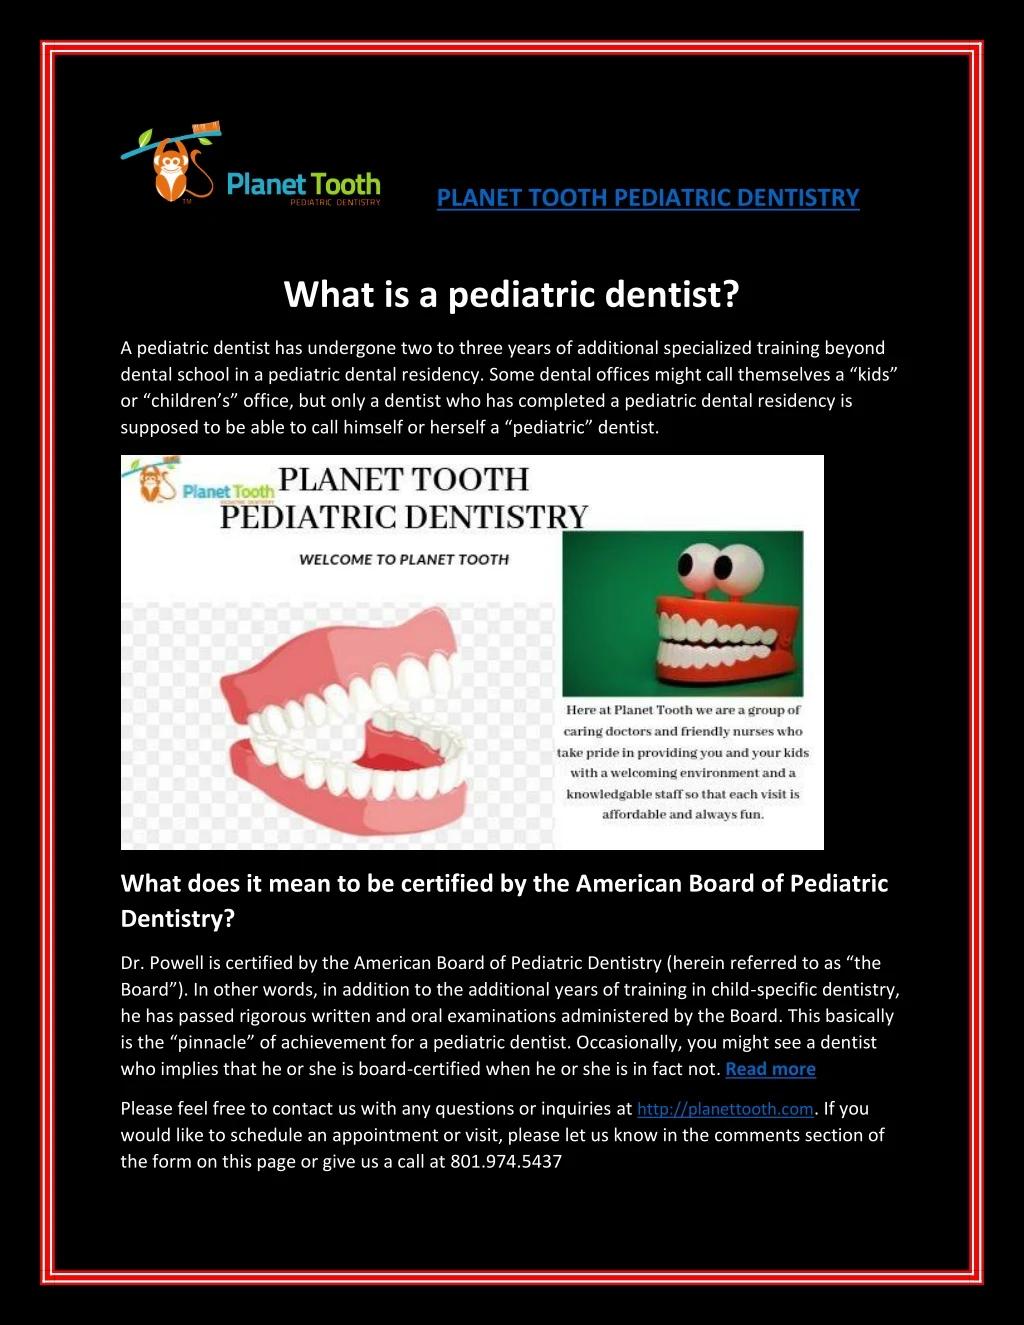 planet tooth pediatric dentistry